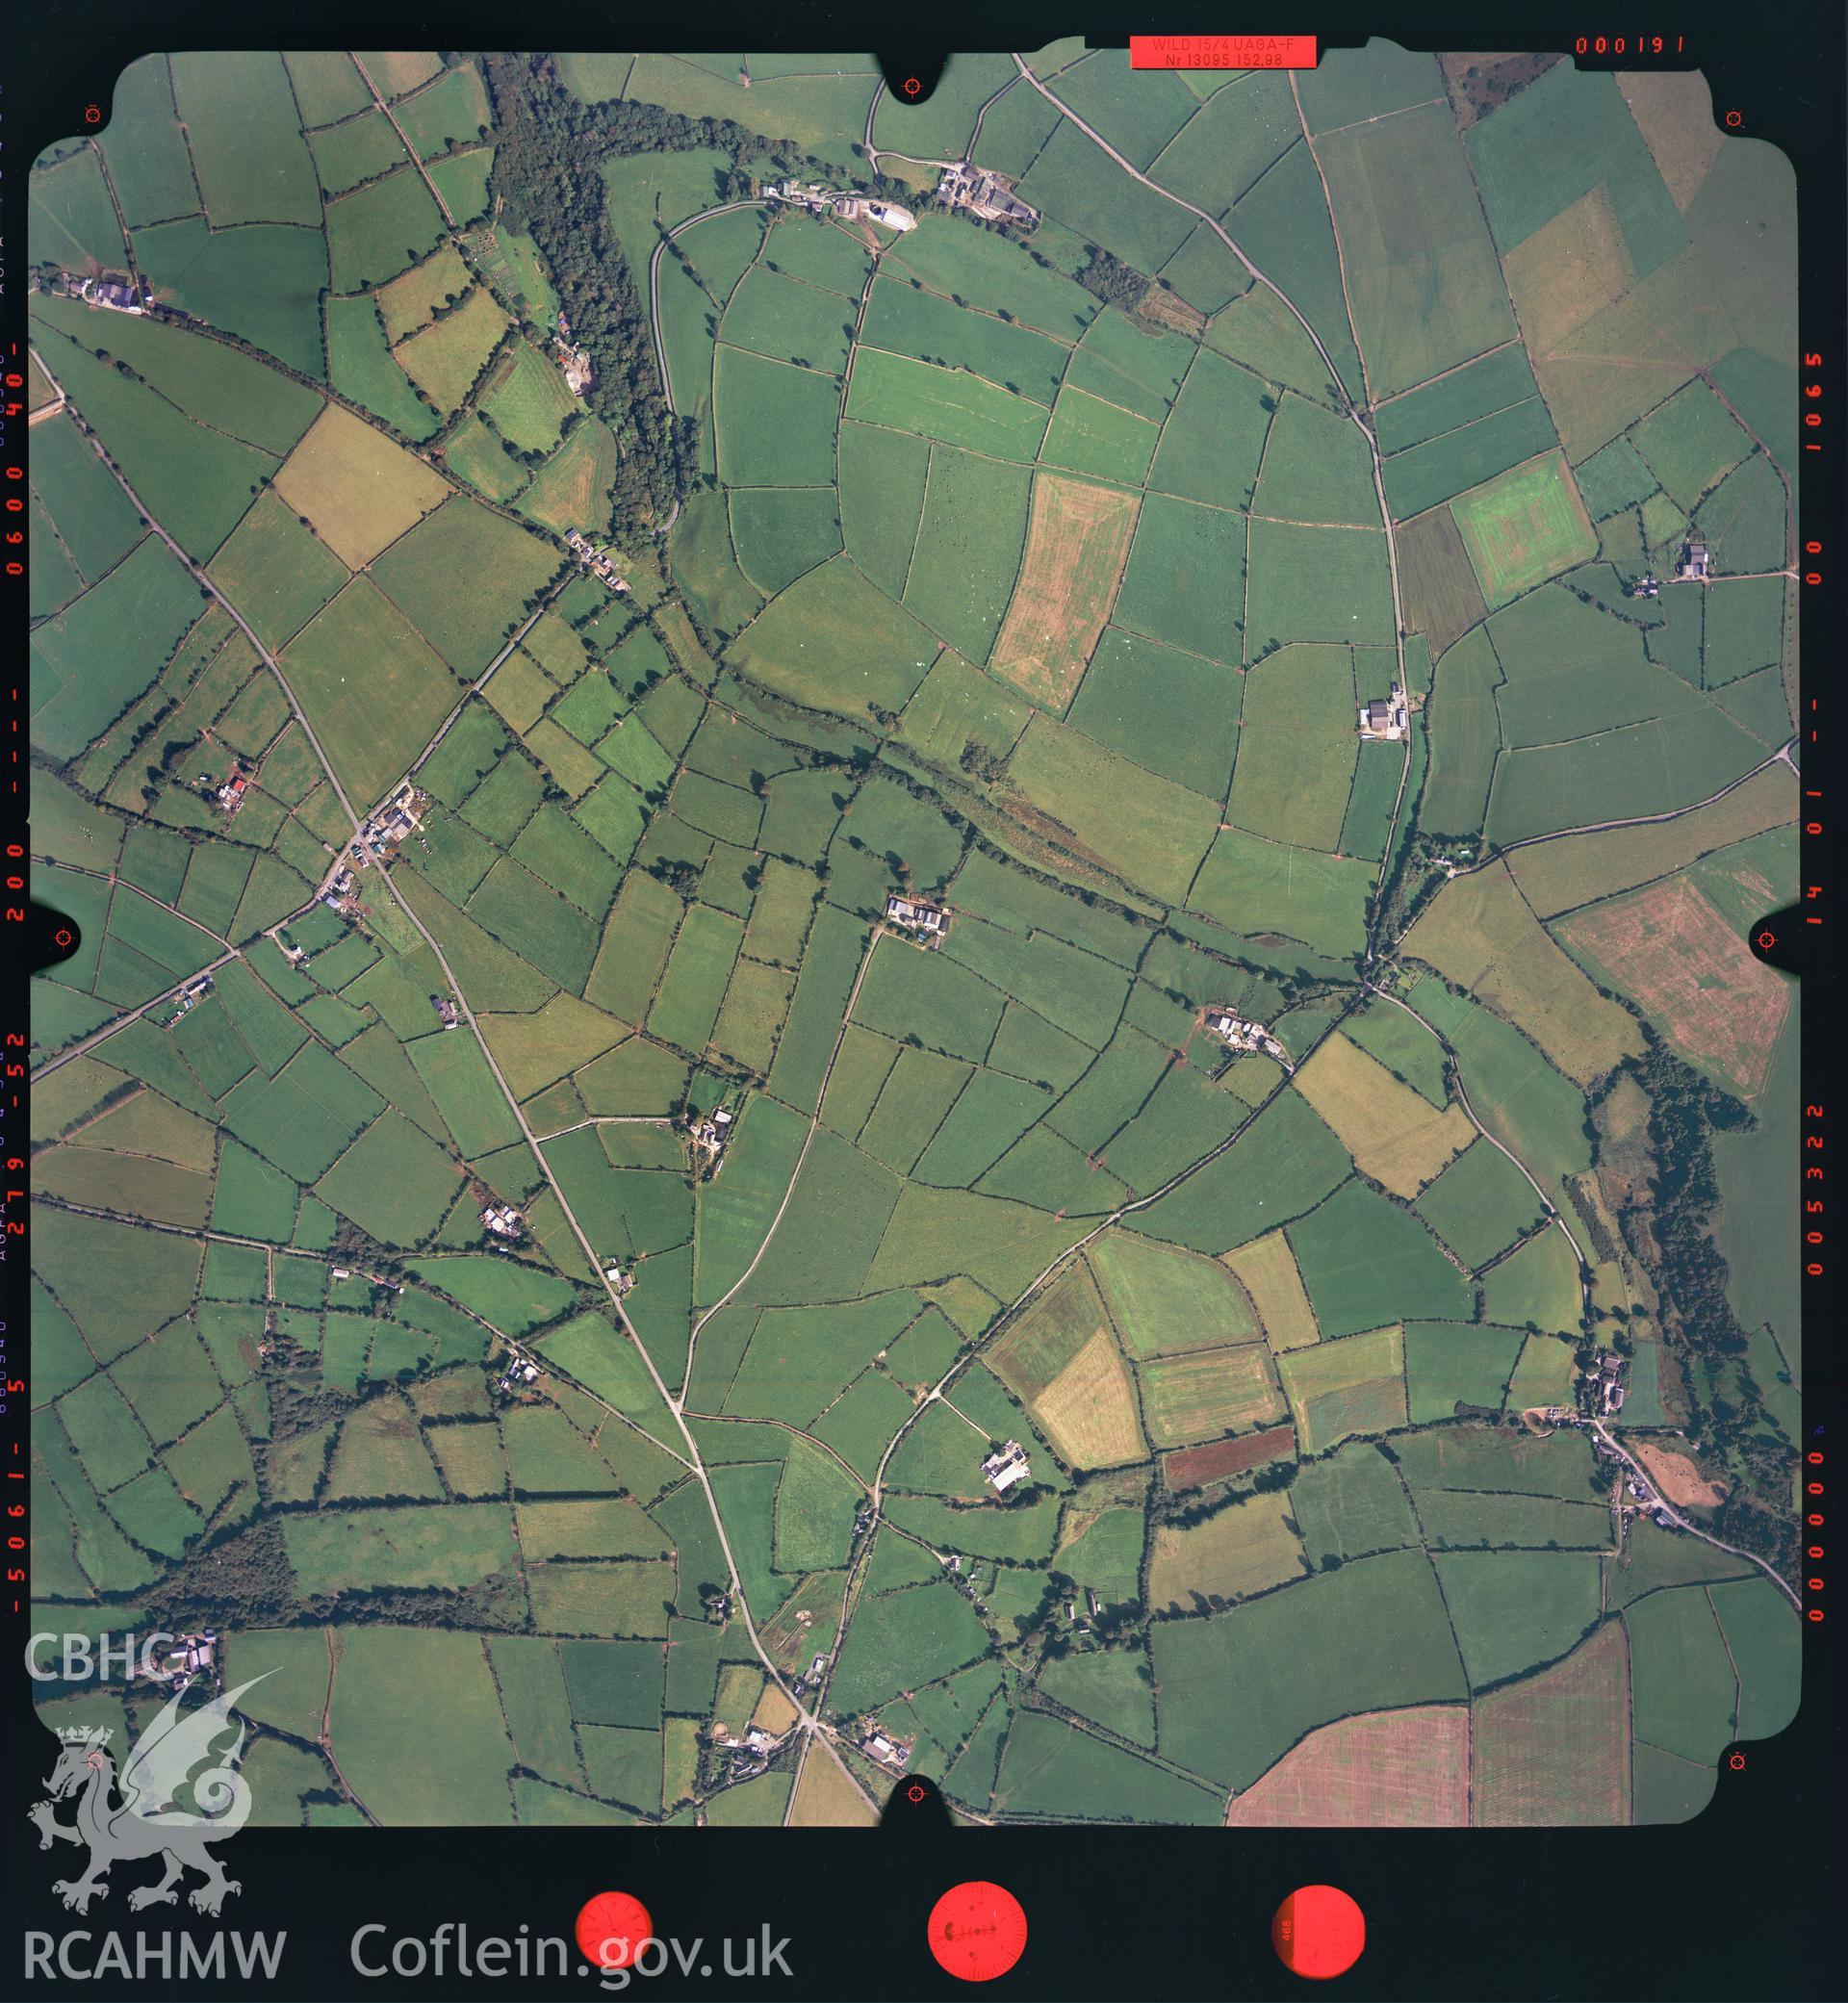 Digitized copy of a colour aerial photograph showing the Clydau area, Pembrokeshire, taken by Ordnance Survey, 2003.